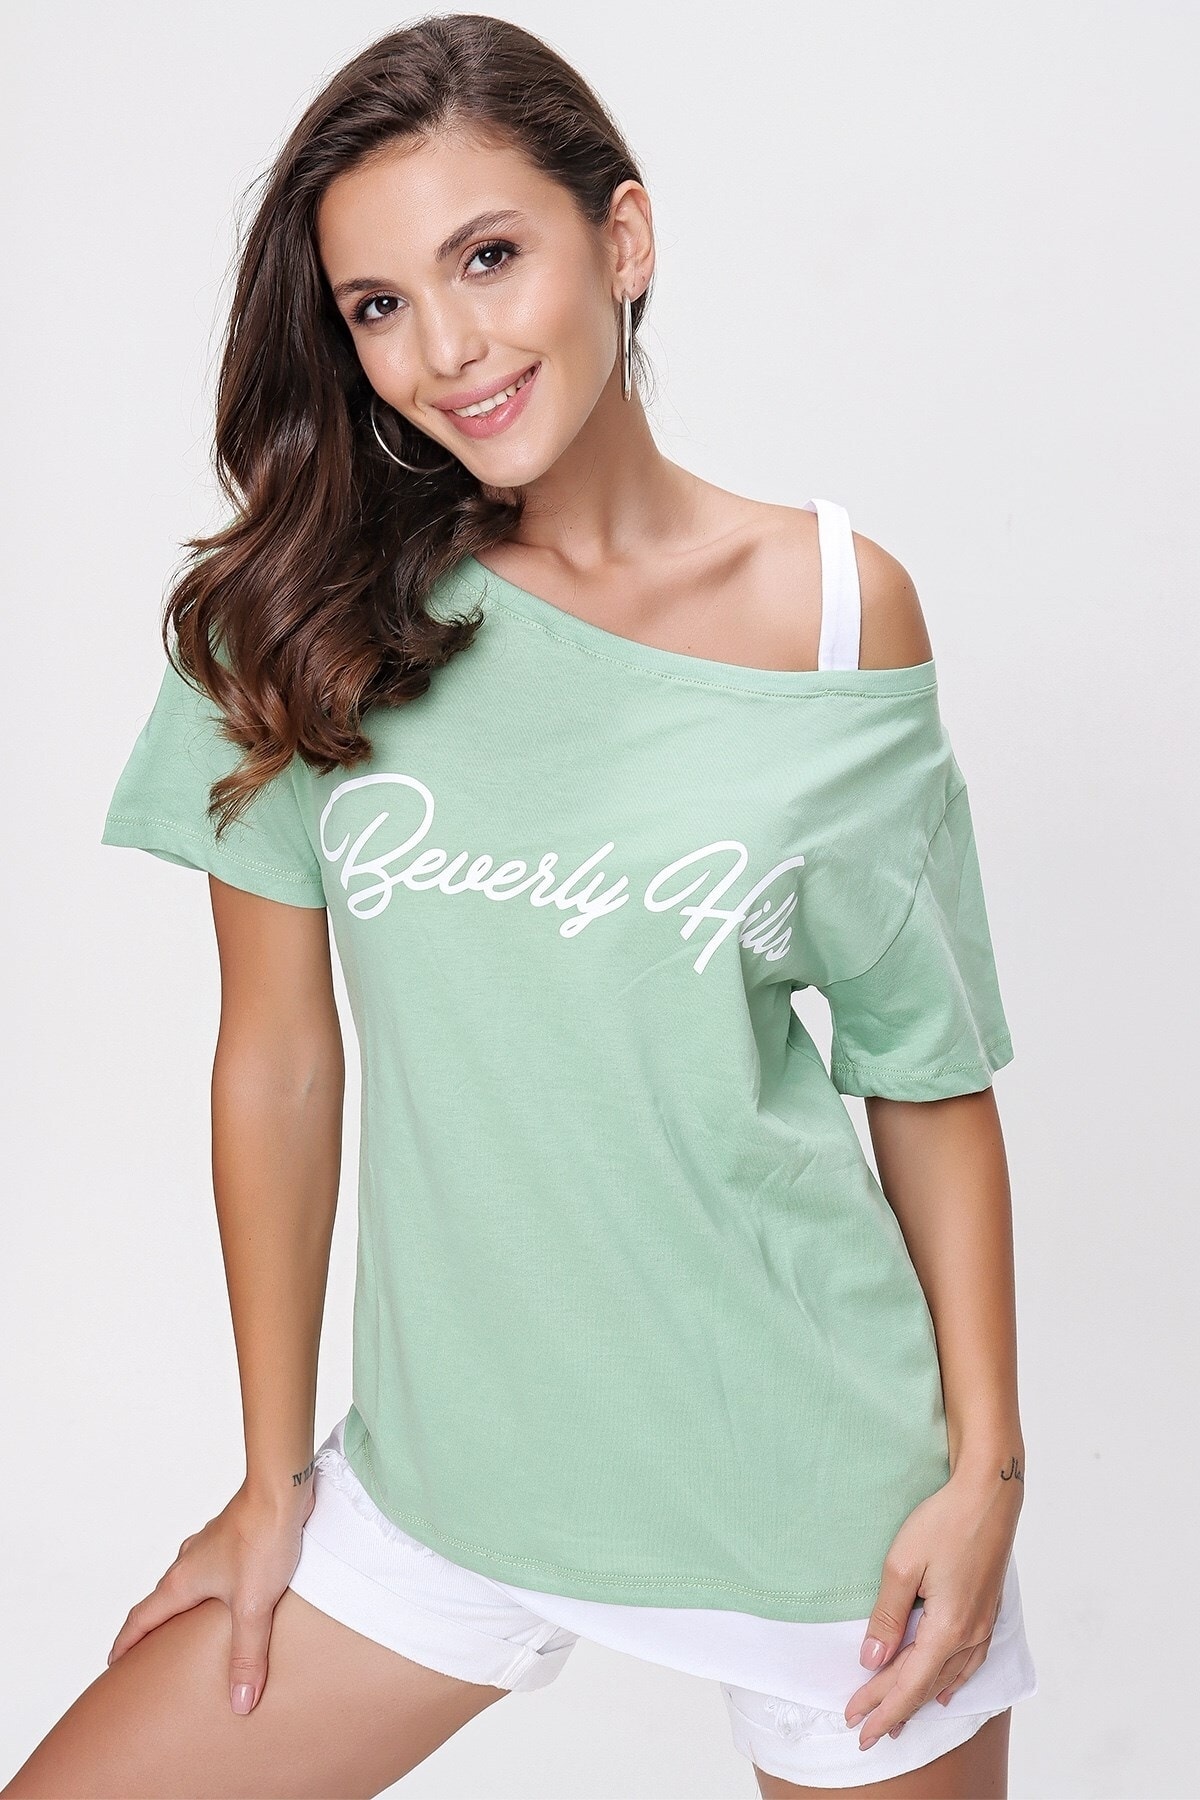 By Saygı Beverly Hills Printed Garnished T-shirt Mint